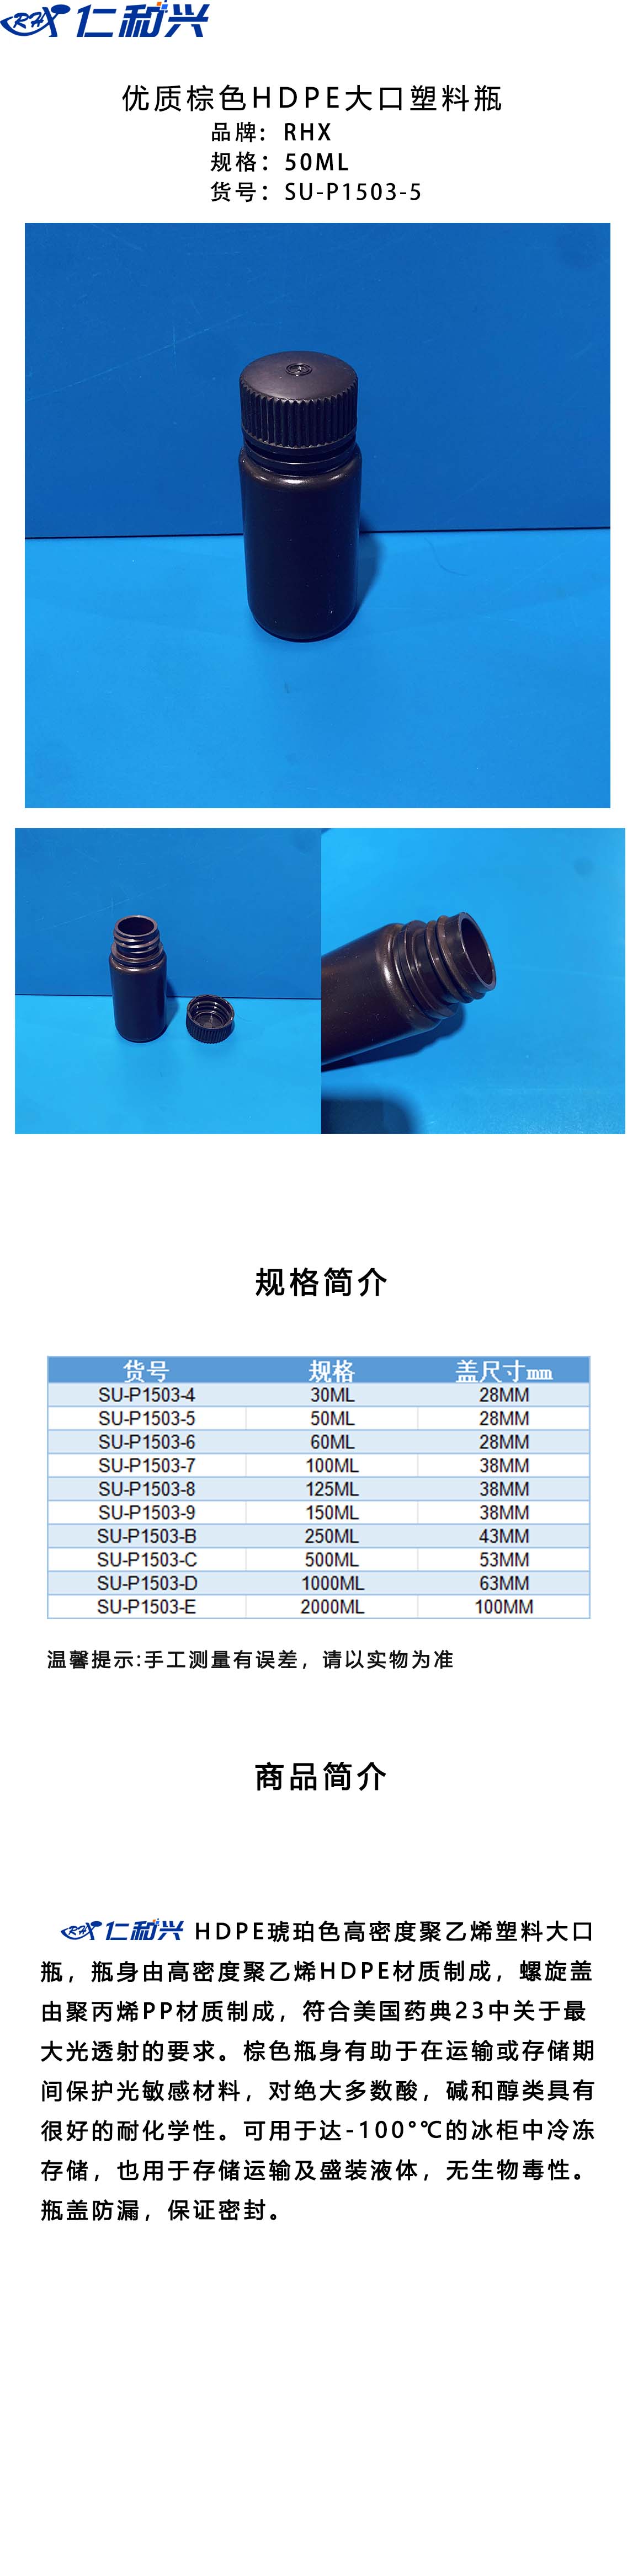 SU-P1503-5 棕色HDPE 大口塑料瓶 长图模板.jpg